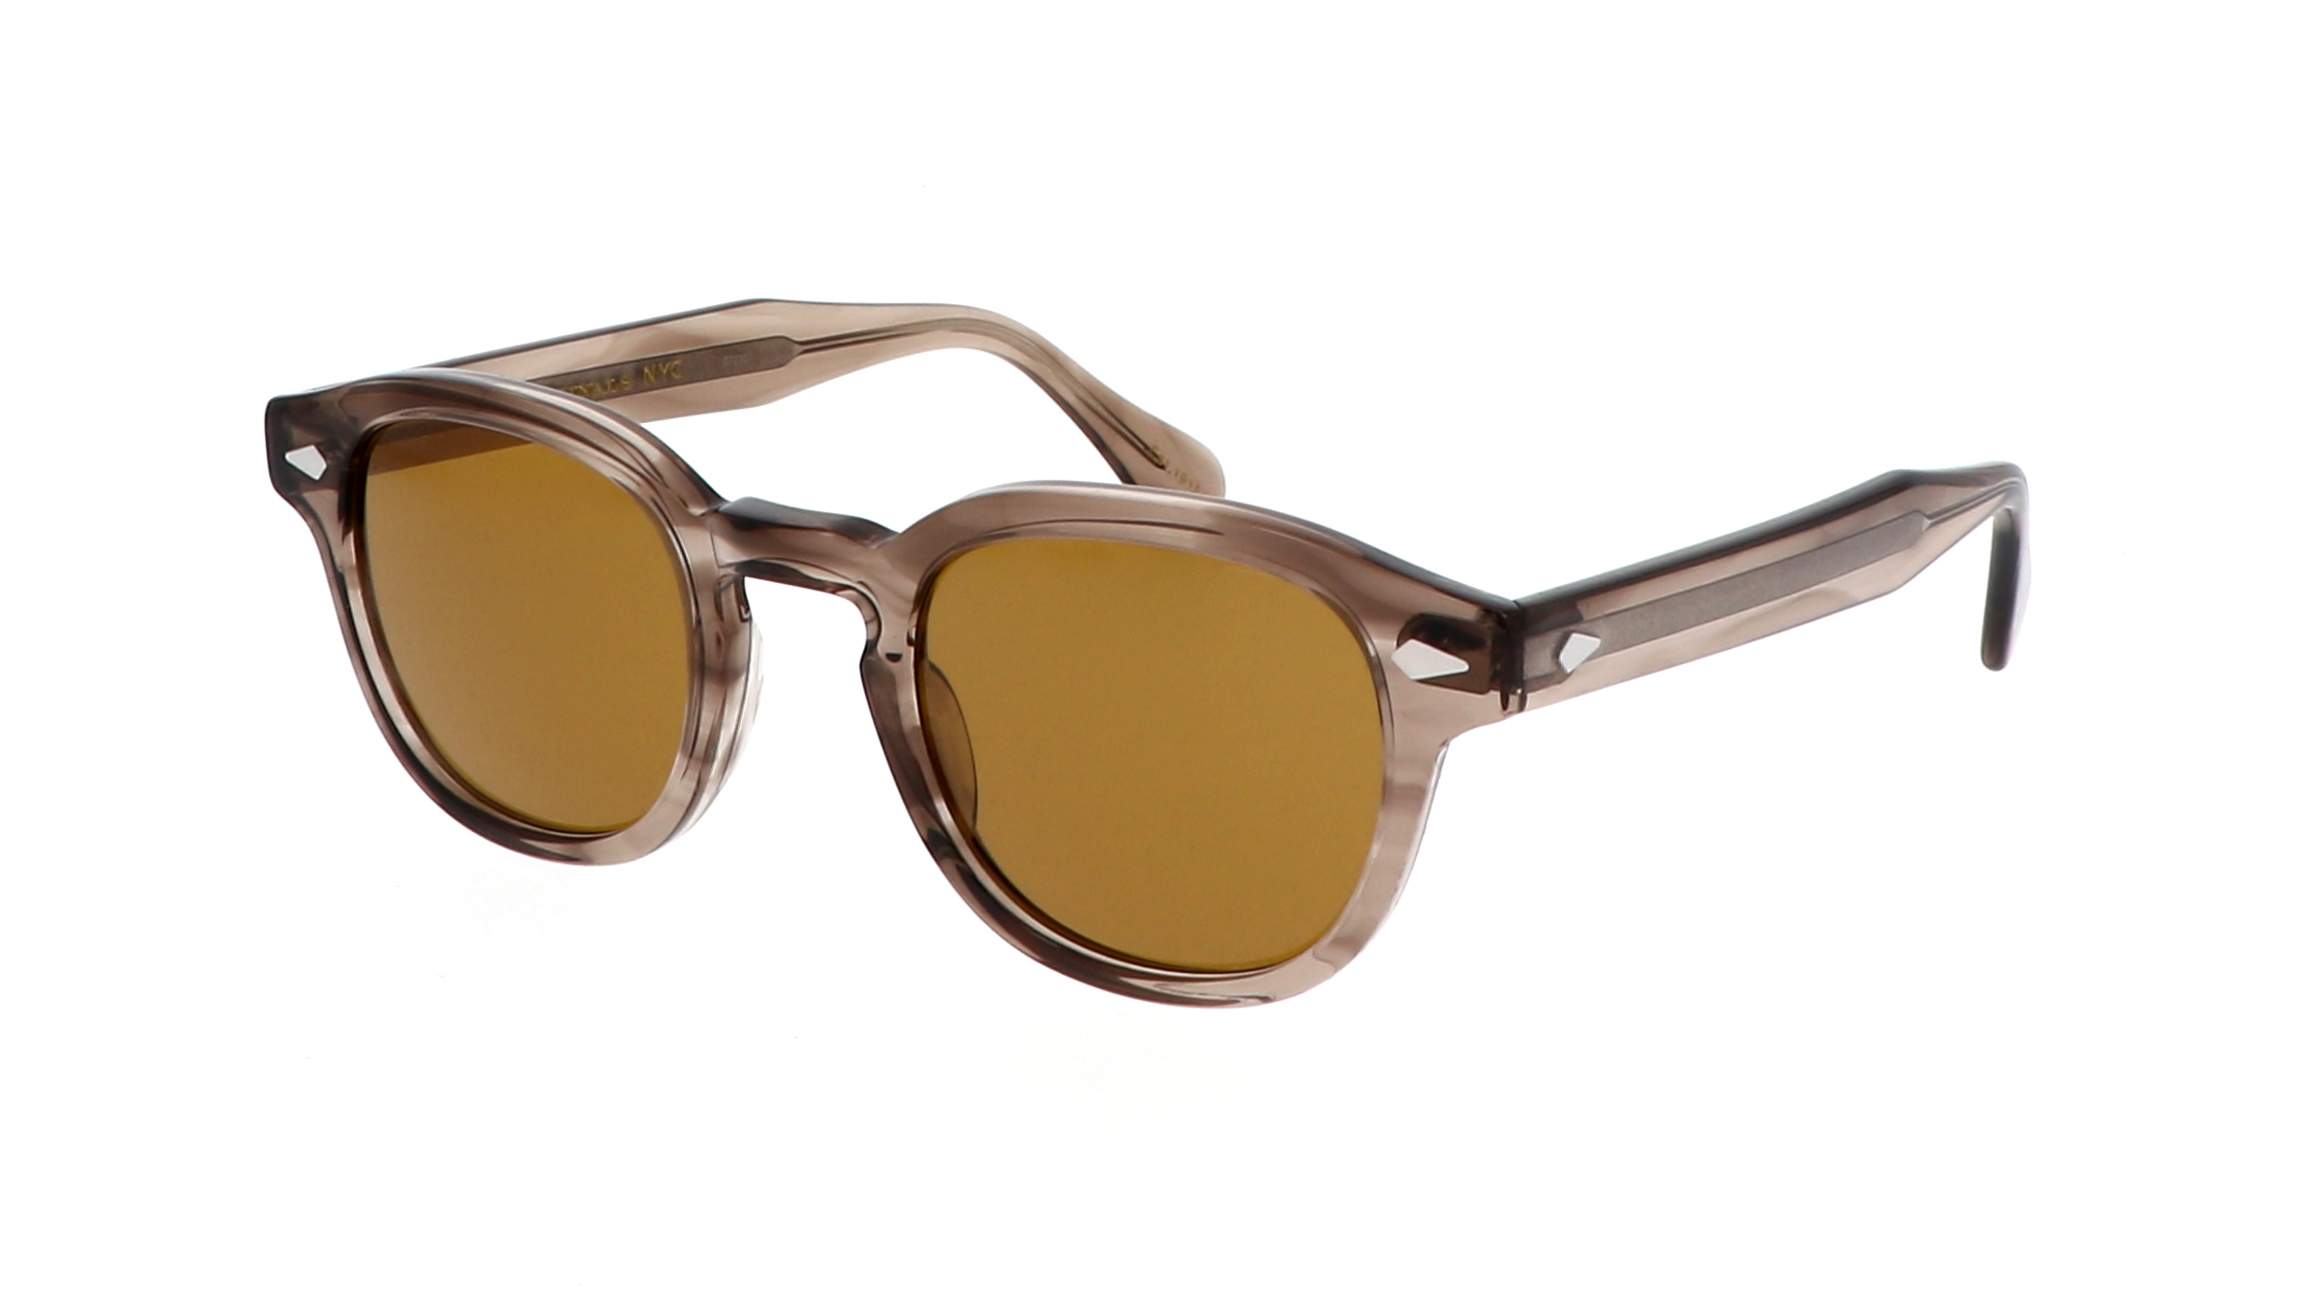 Sunglasses Moscot Lemtosh Brown Ash 46-24 in stock | Price 262,50